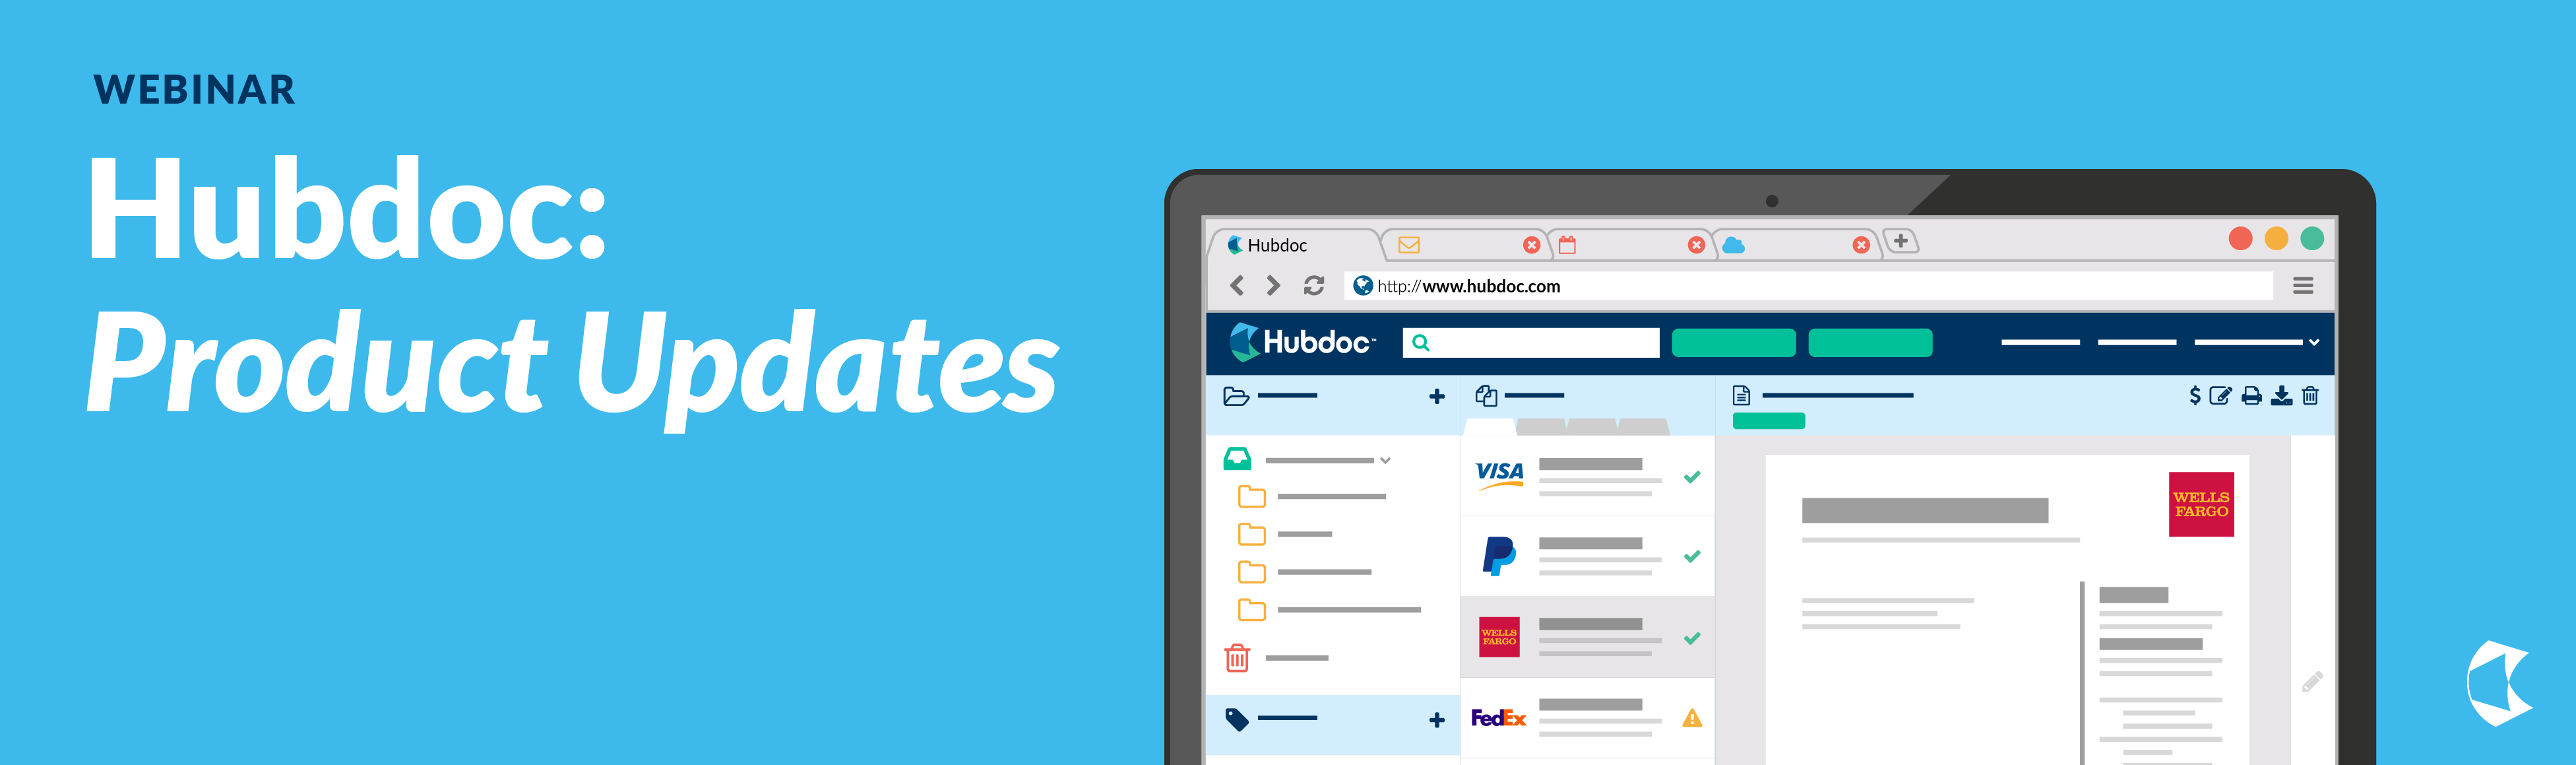 Hubdoc Product Update Webinar